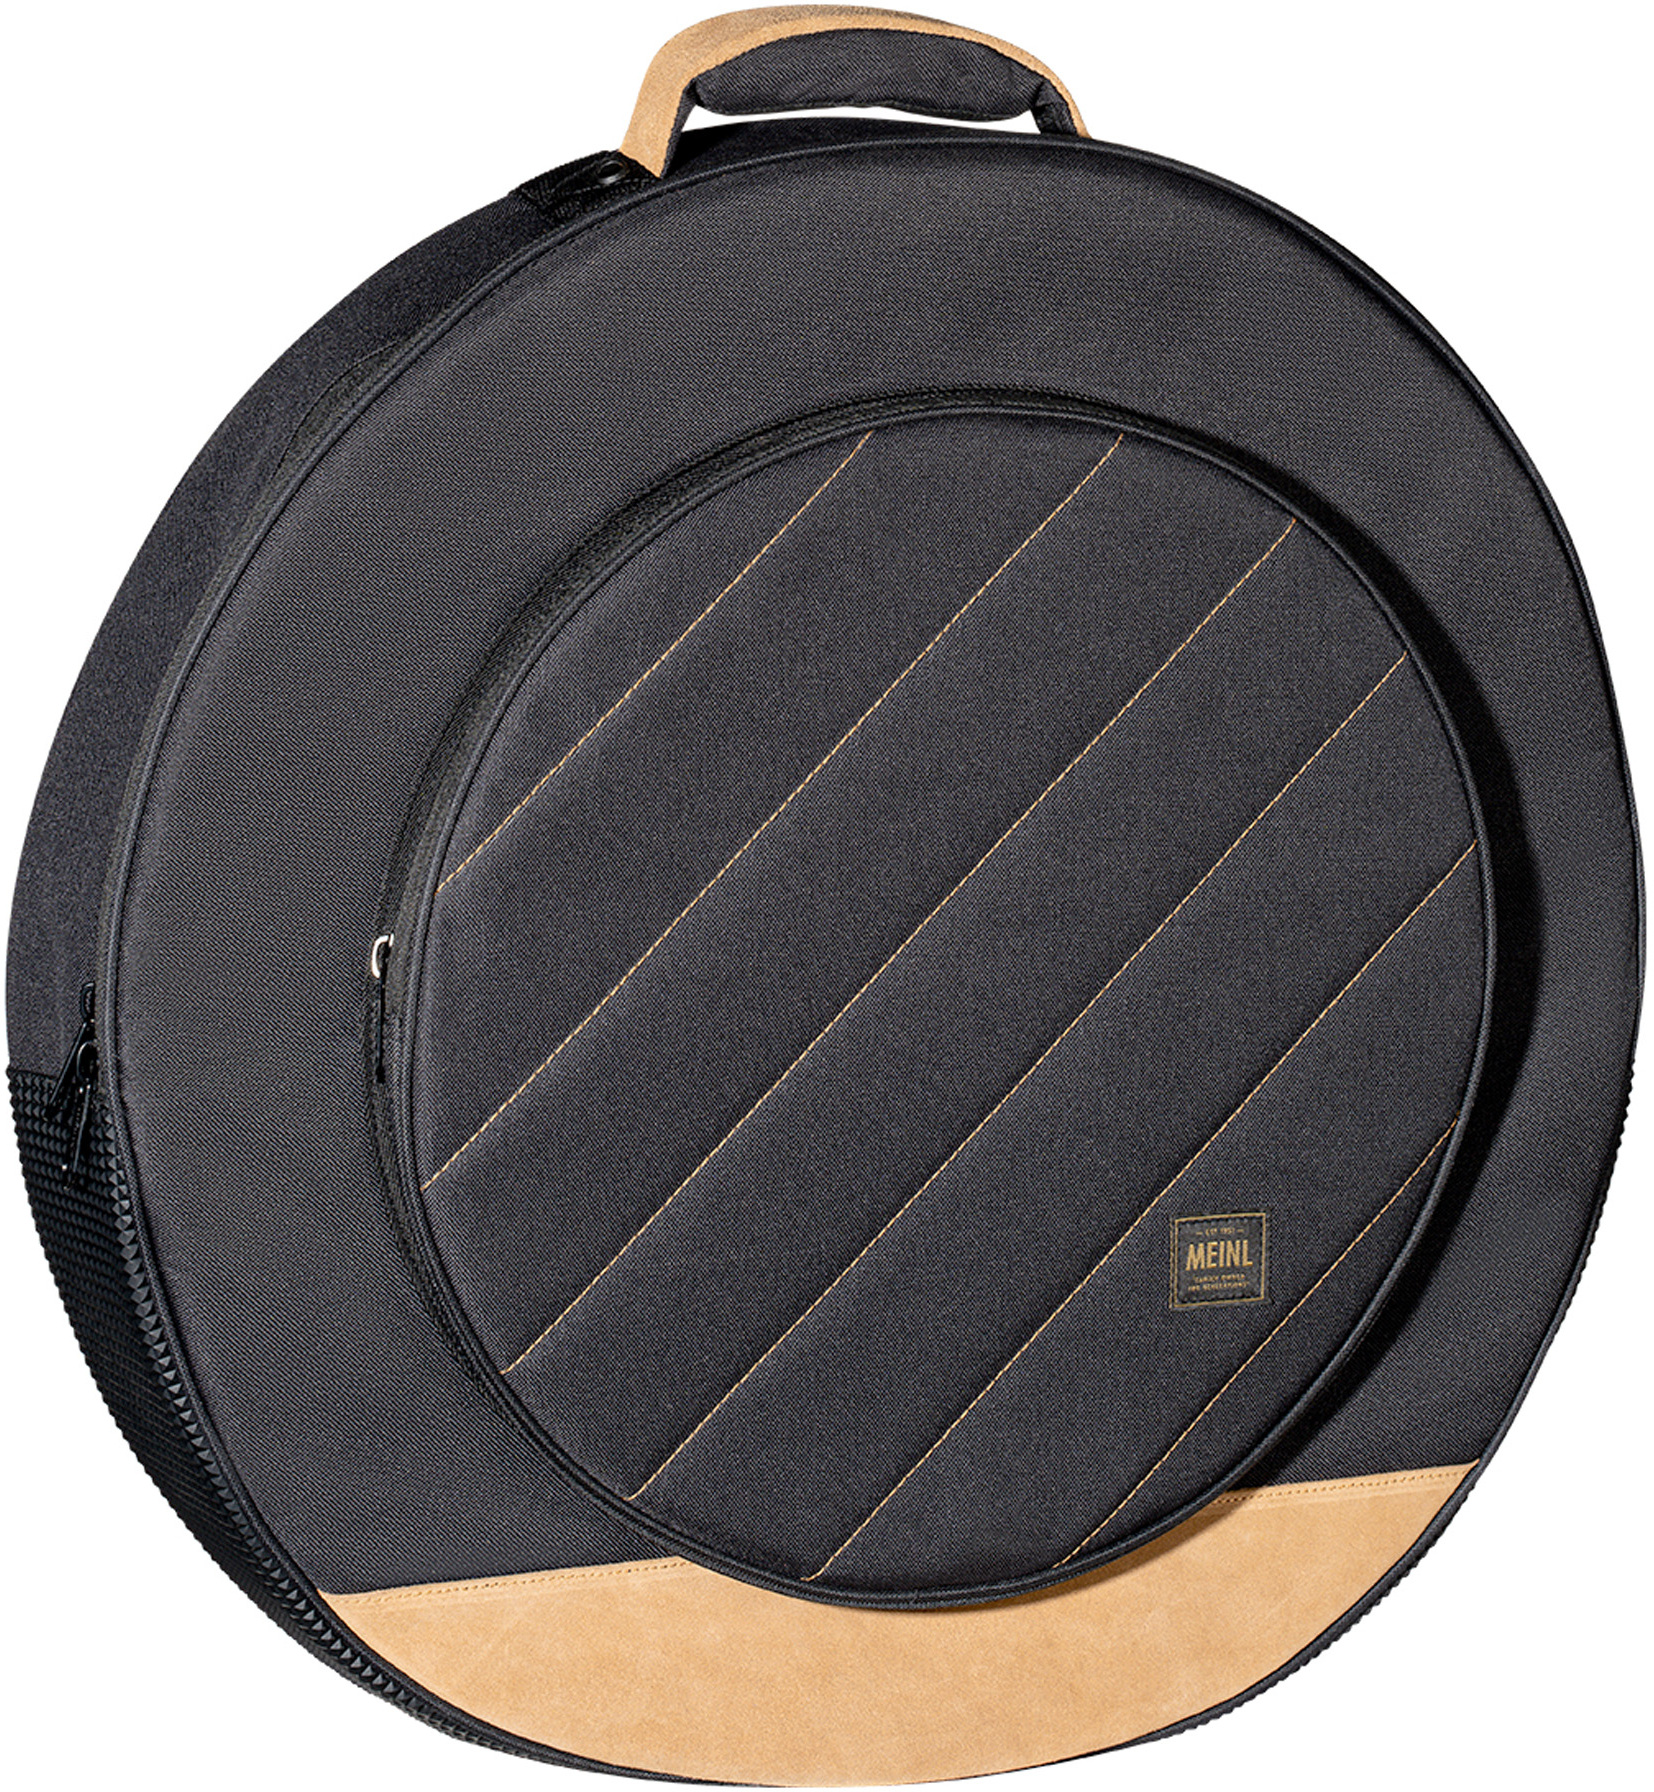 Meinl Mccb22bk Housse Cymbales Woven Black - Cymbal bag - Main picture